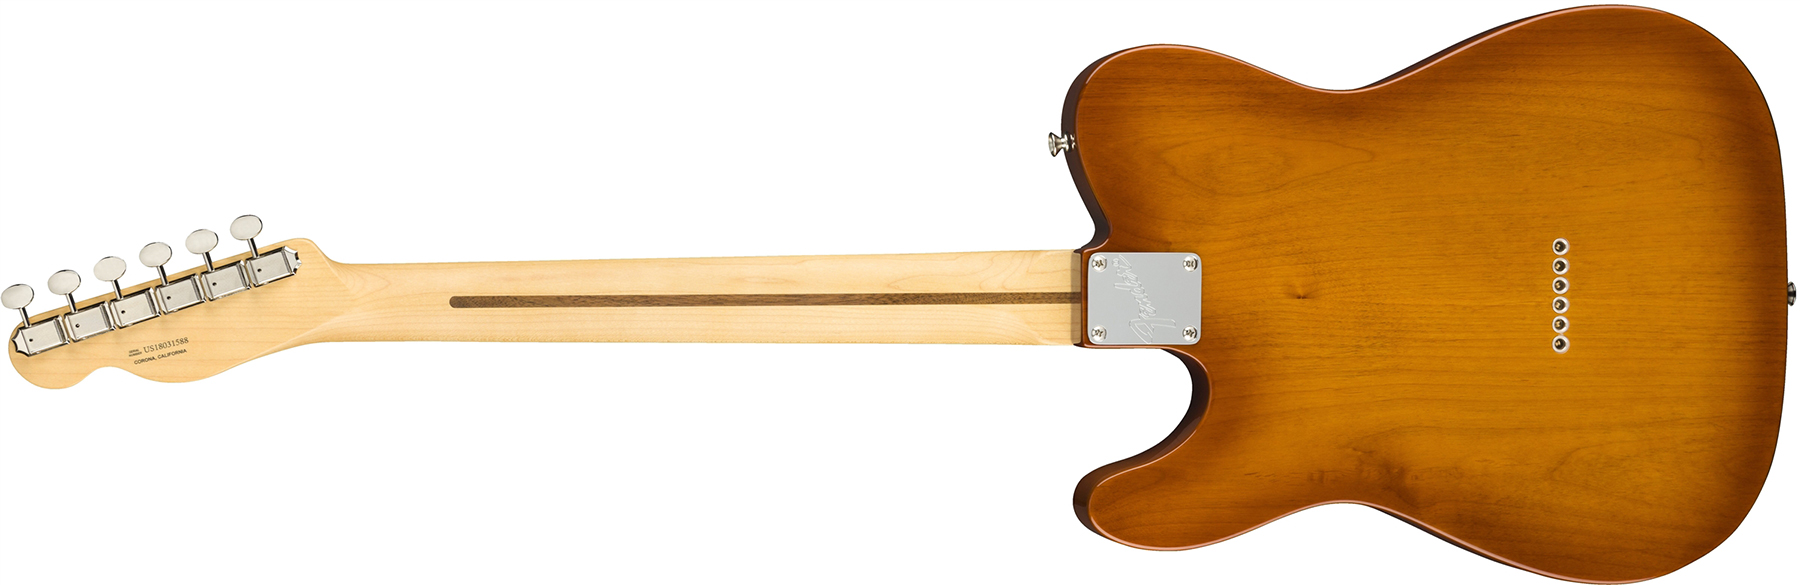 Fender Tele American Performer Usa Rw - Honey Burst - Televorm elektrische gitaar - Variation 1